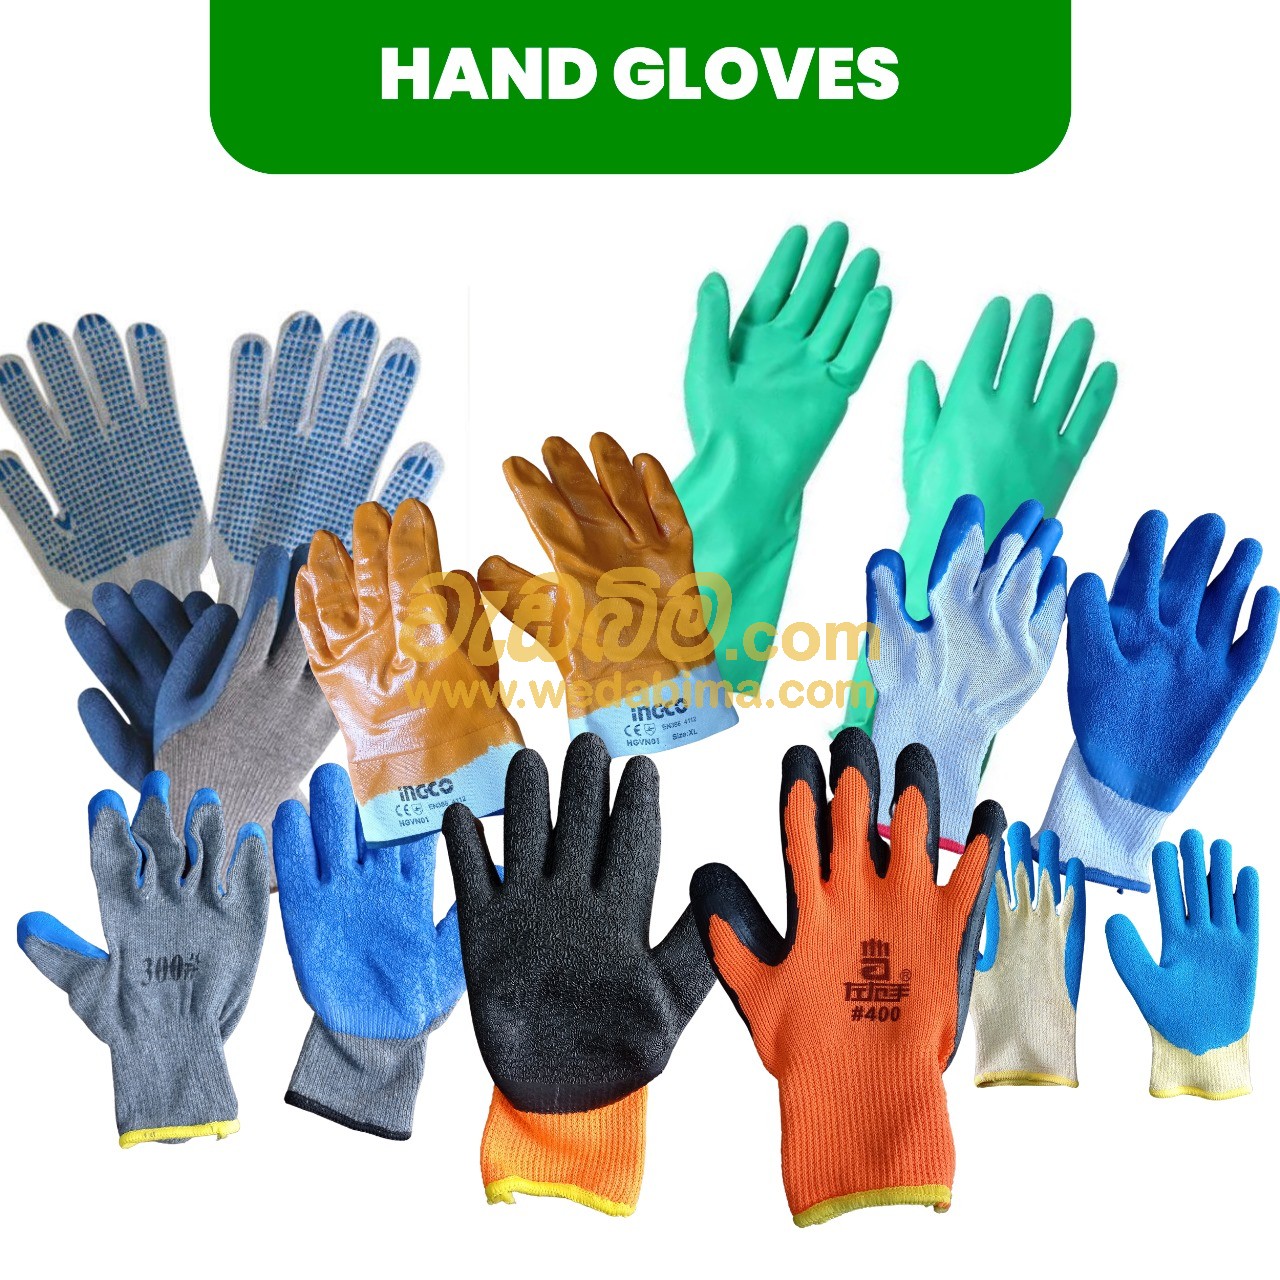 Safety Gloves Suppliers in Sri Lanka